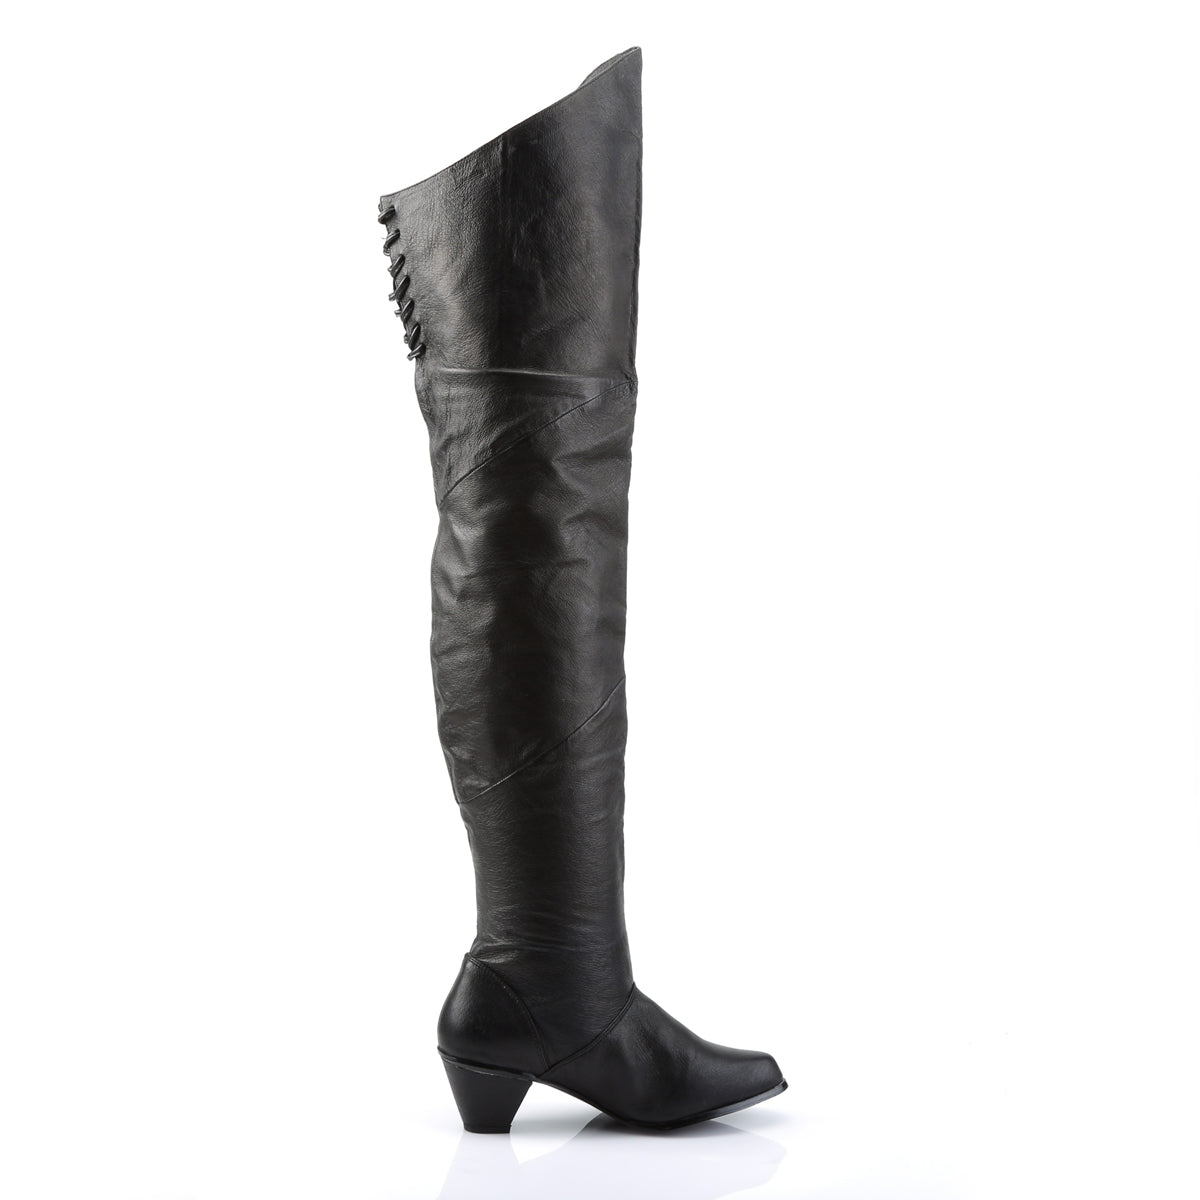 MAIDEN-8828 2.5" Heel Black Leather Women's Boots Funtasma Costume Shoes Fancy Dress